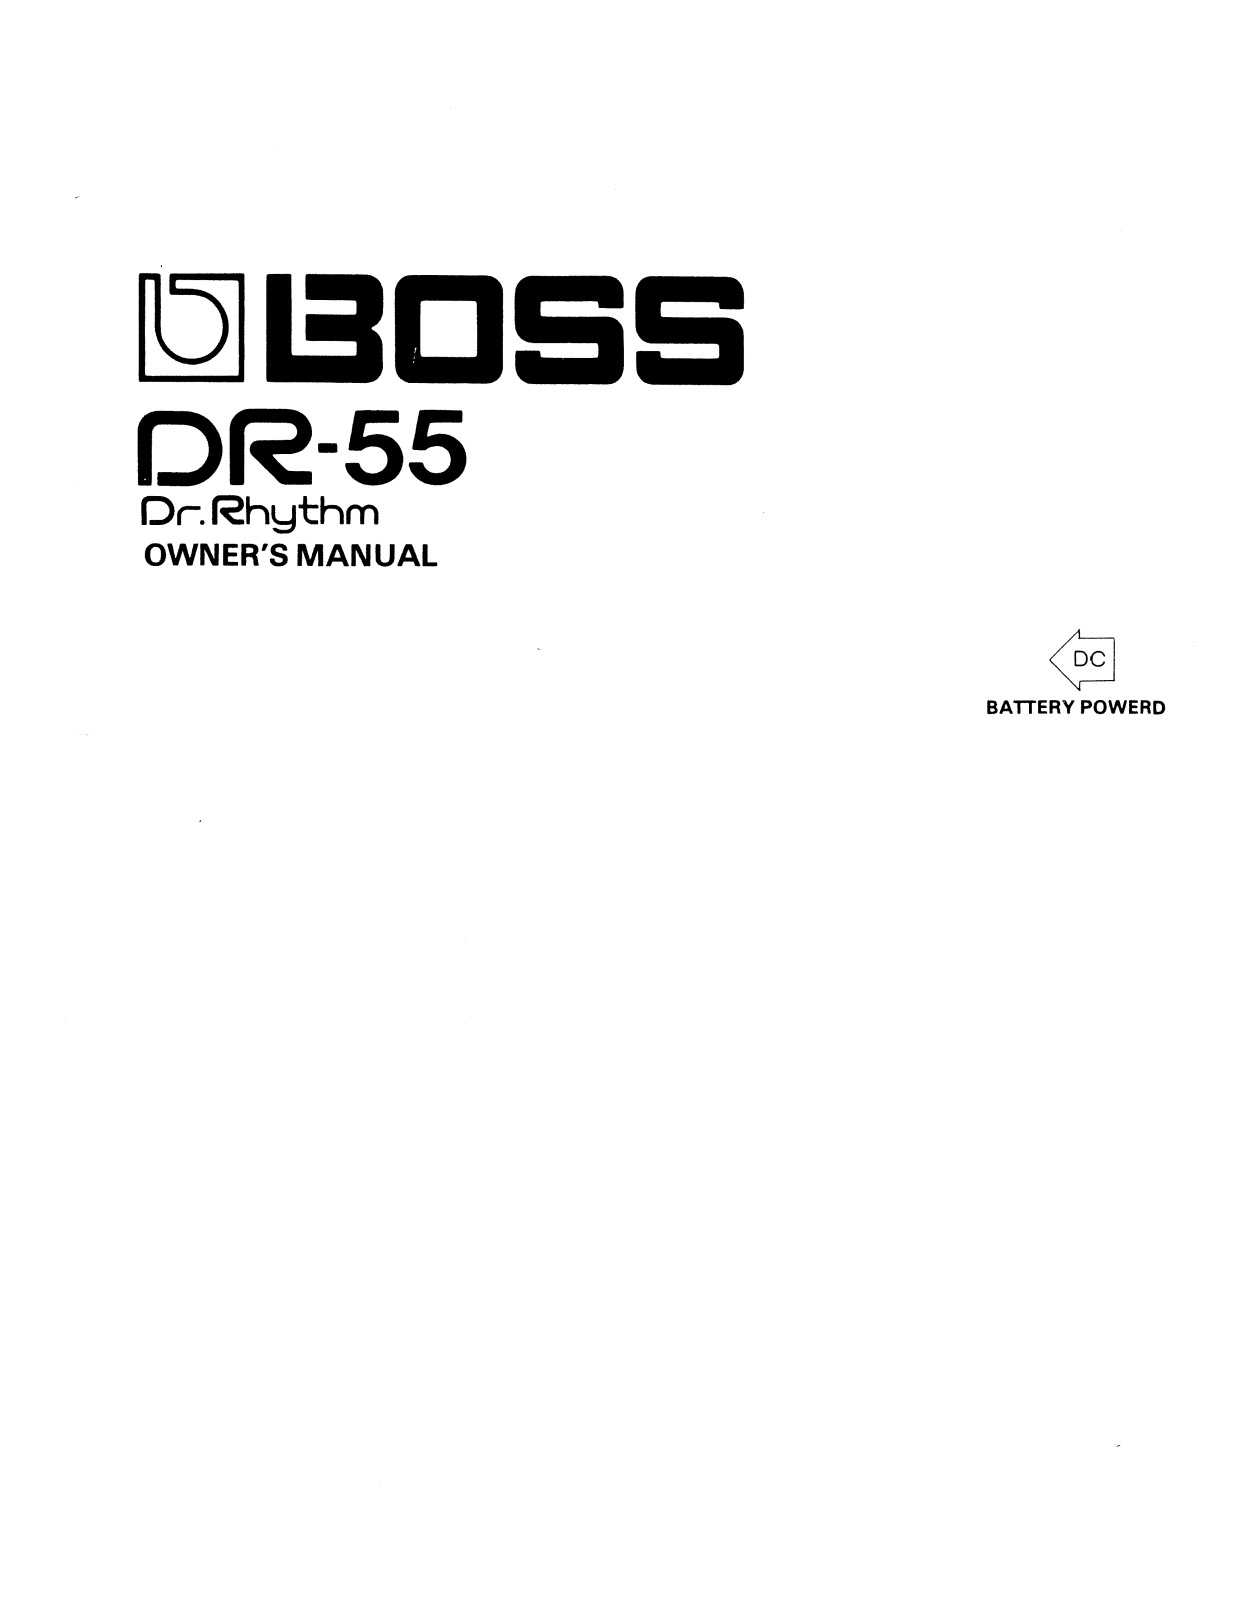 Boss DR-55 User Manual